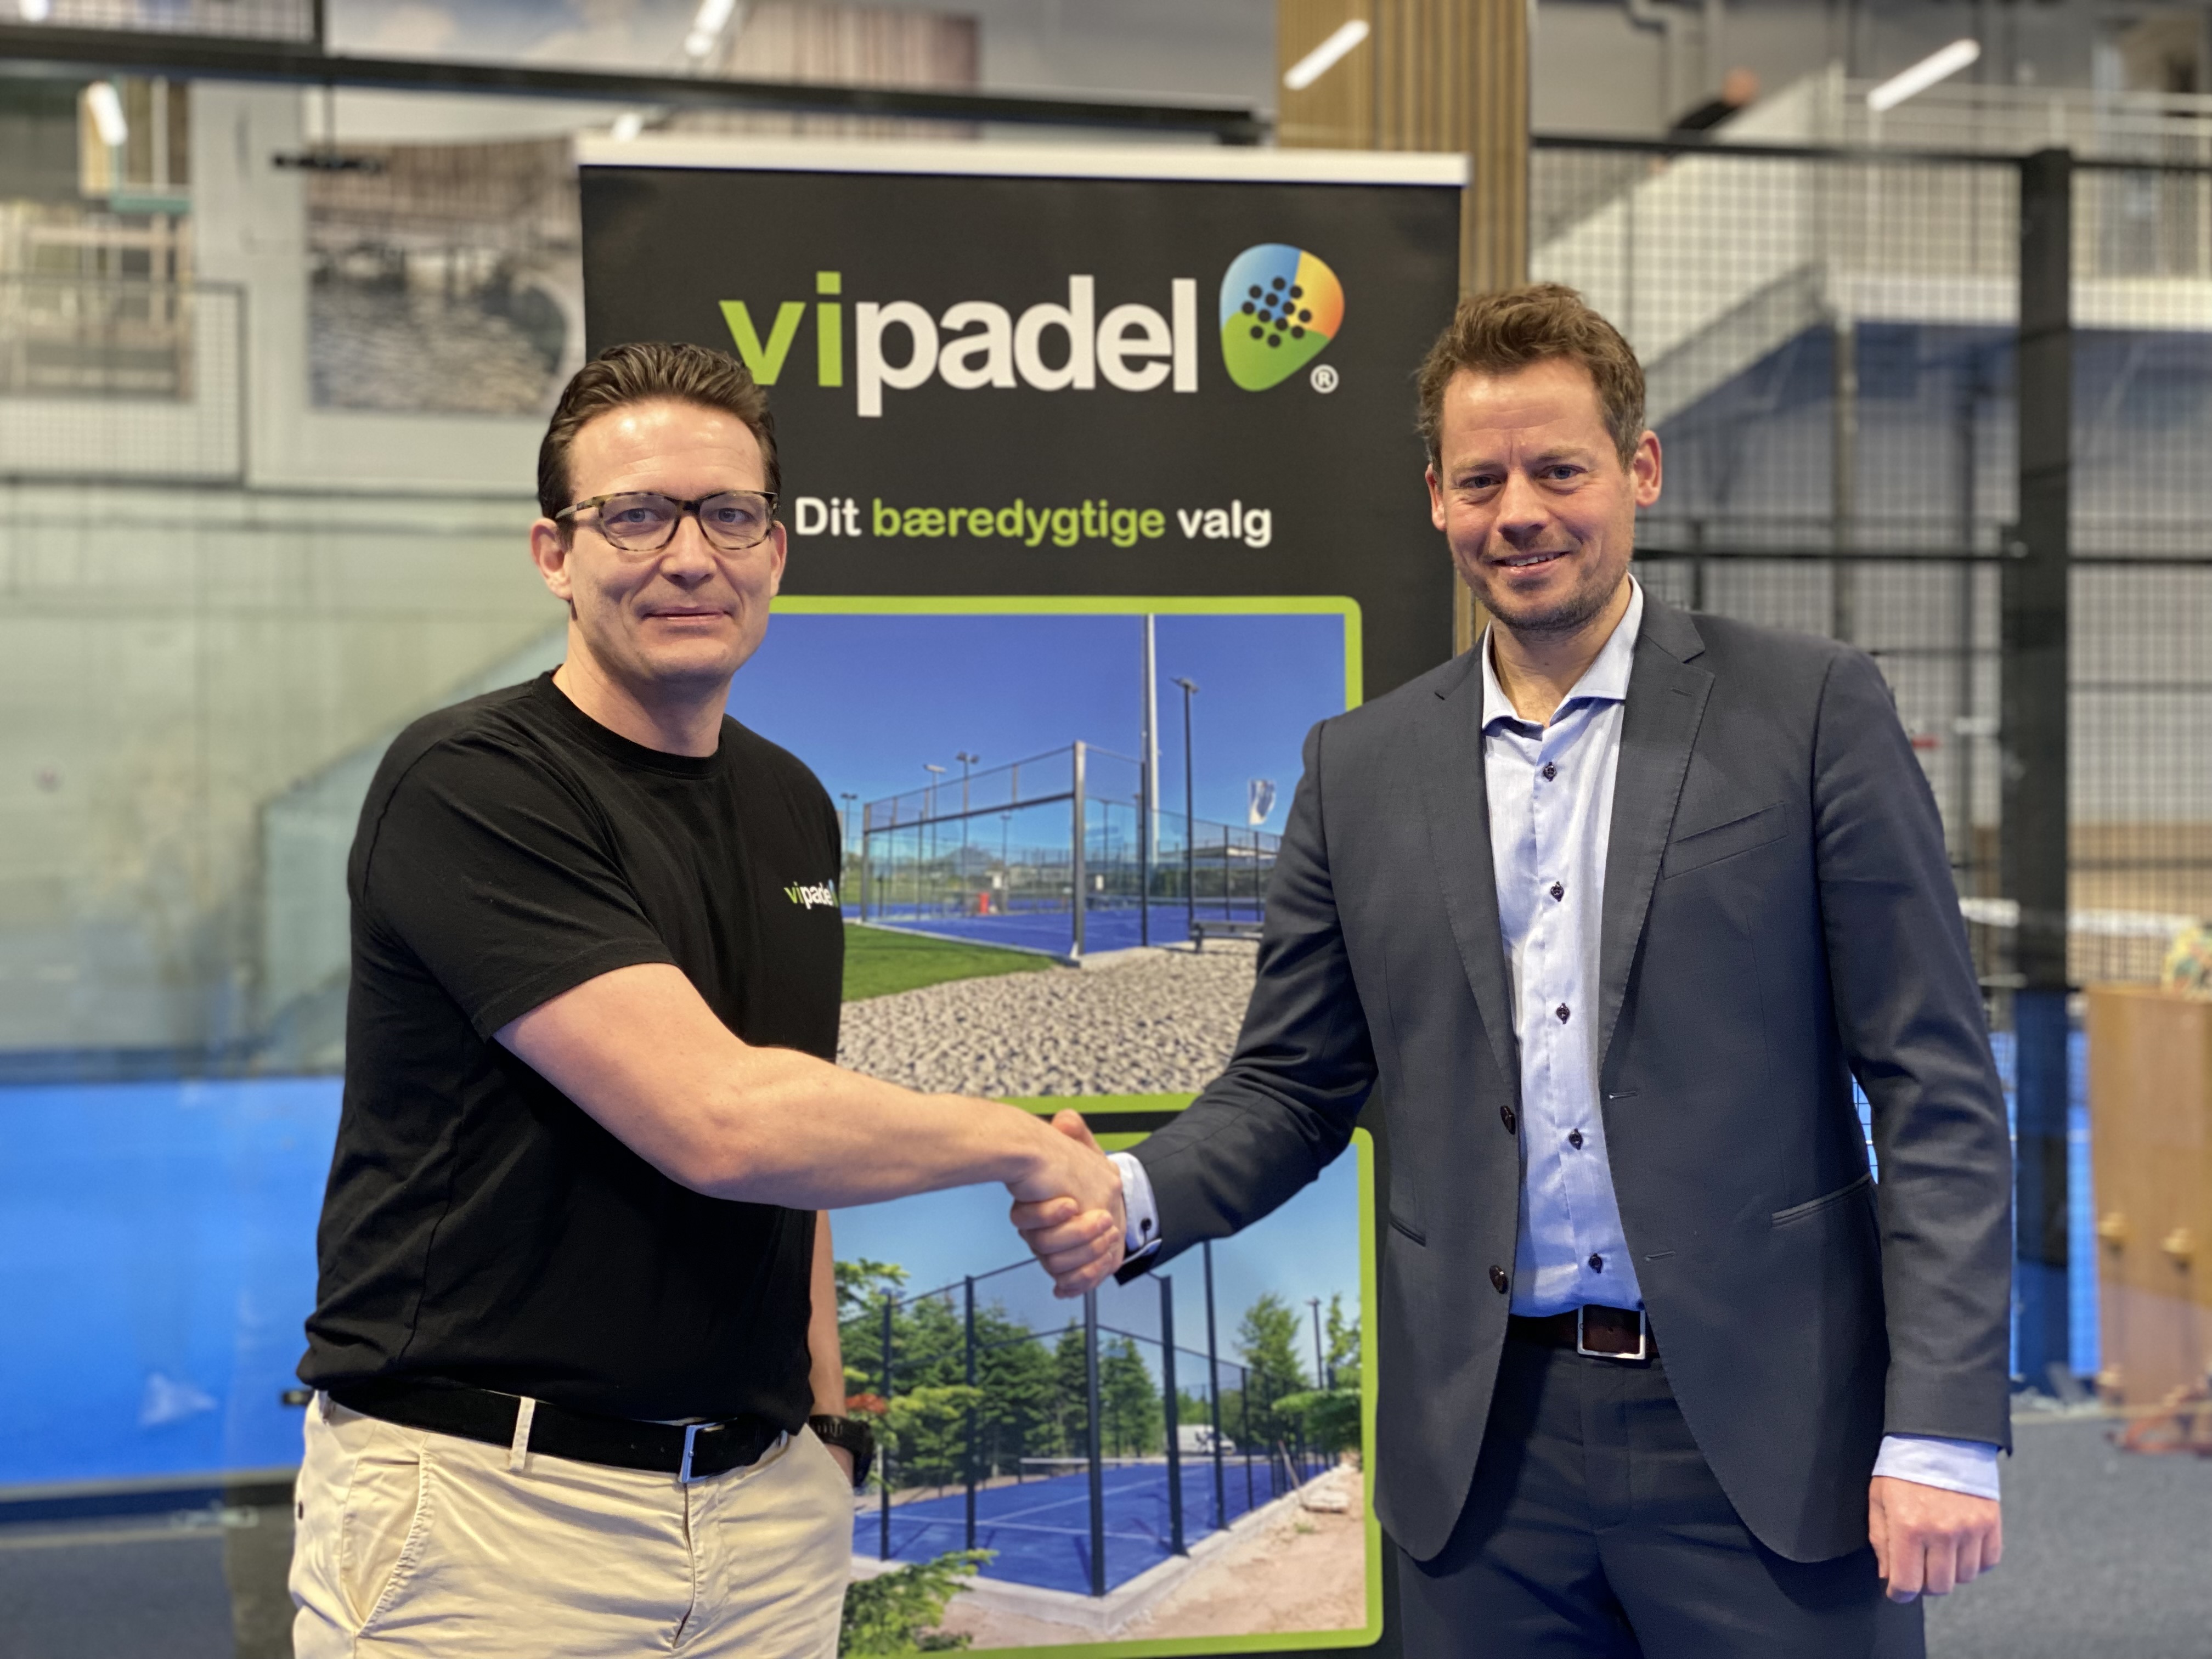 Dansk Padel forbund lander historisk aftale med Vipadel.